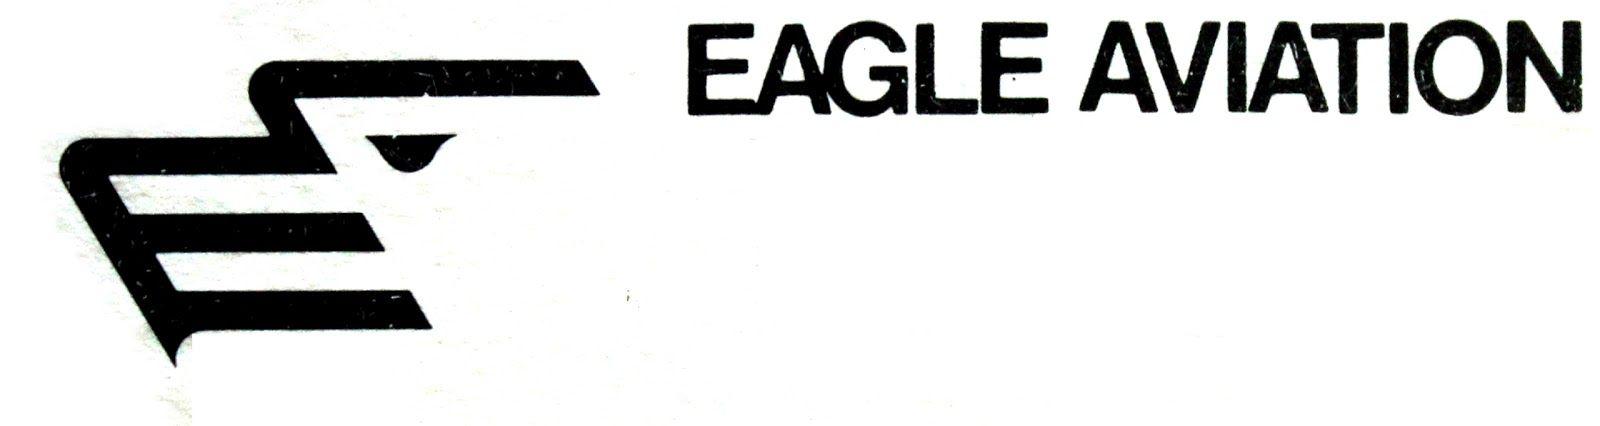 Eagle Aviation Logo - 3rd Level New Zealand: Eagle Airways 1 Fledgling Eagle